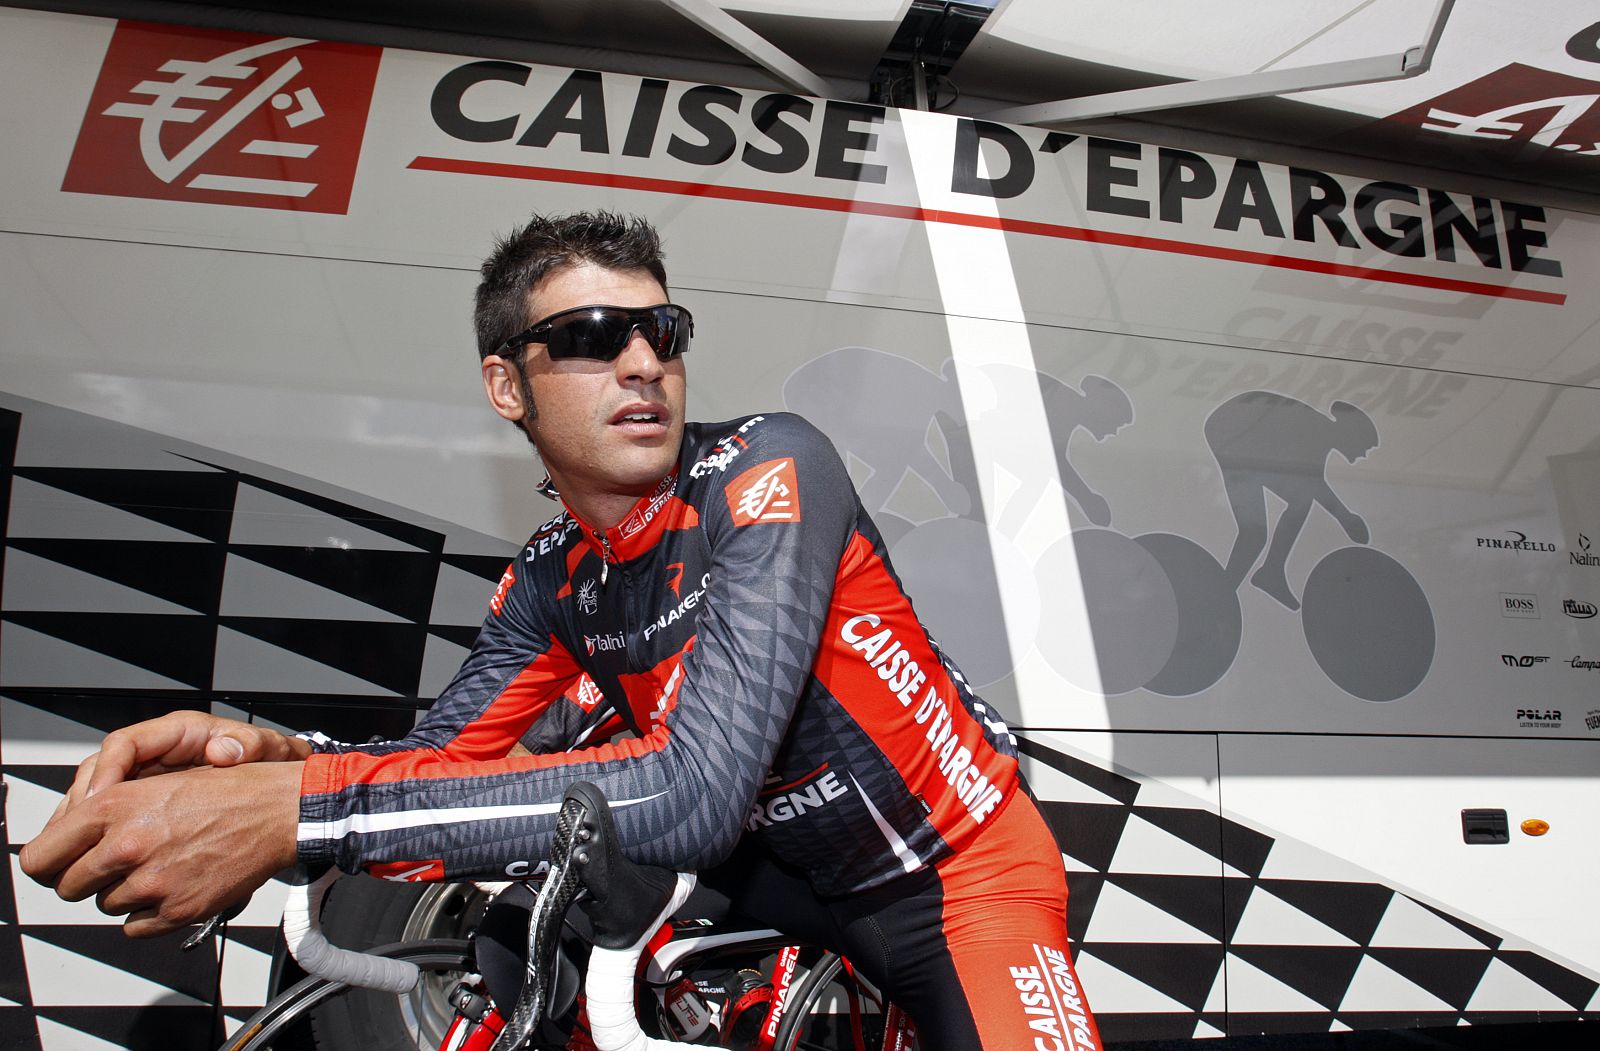 El ciclista español del Caisse d'Epargne, Óscar Pereiro.